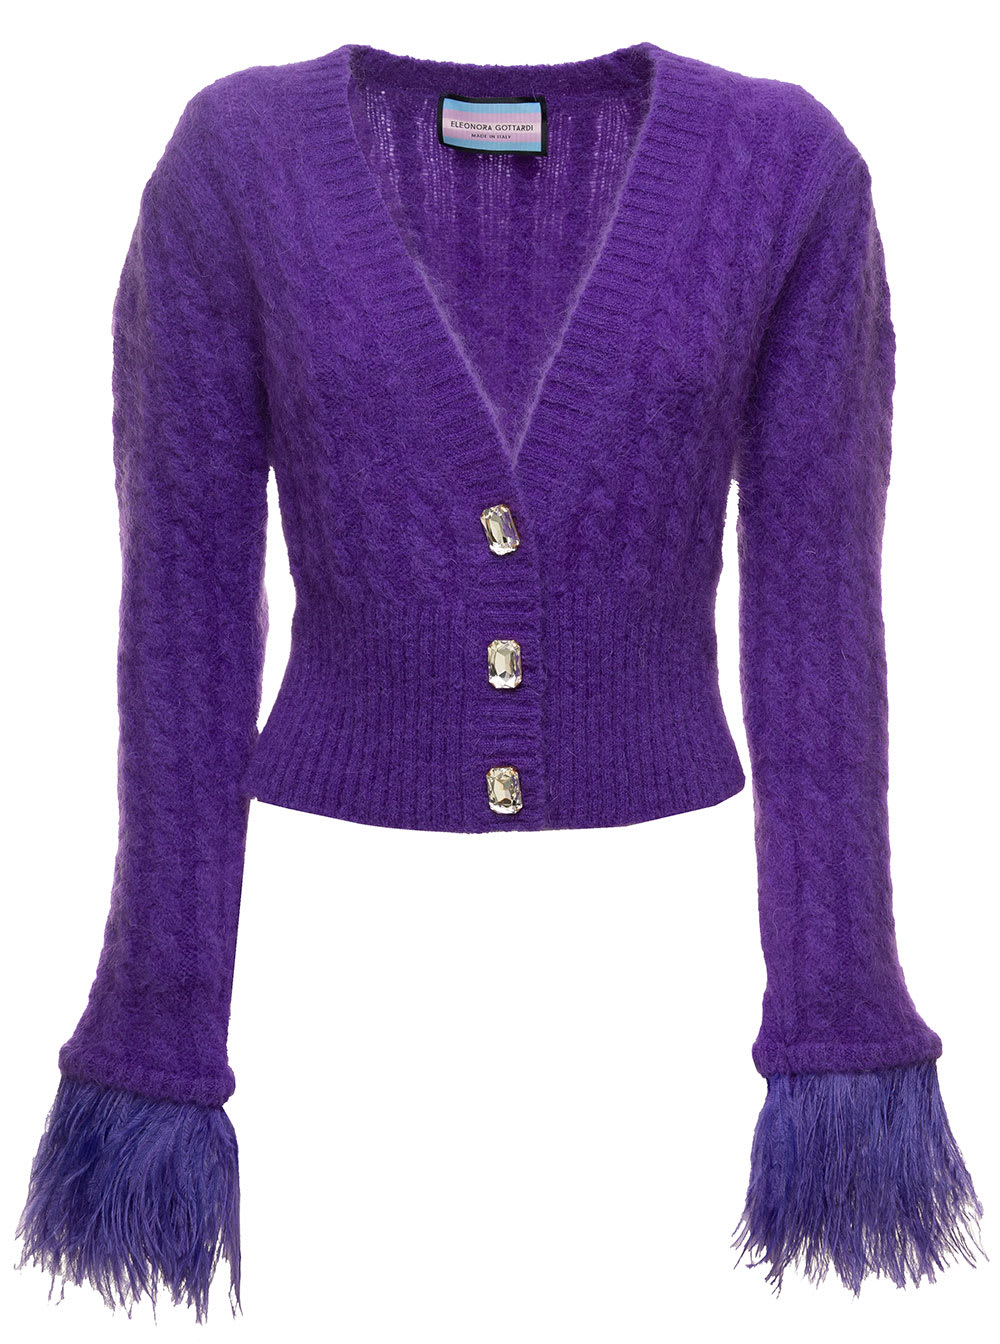 Purple Feathers Knitted Cardigan In Mohair Woman Eleonora Gottardi